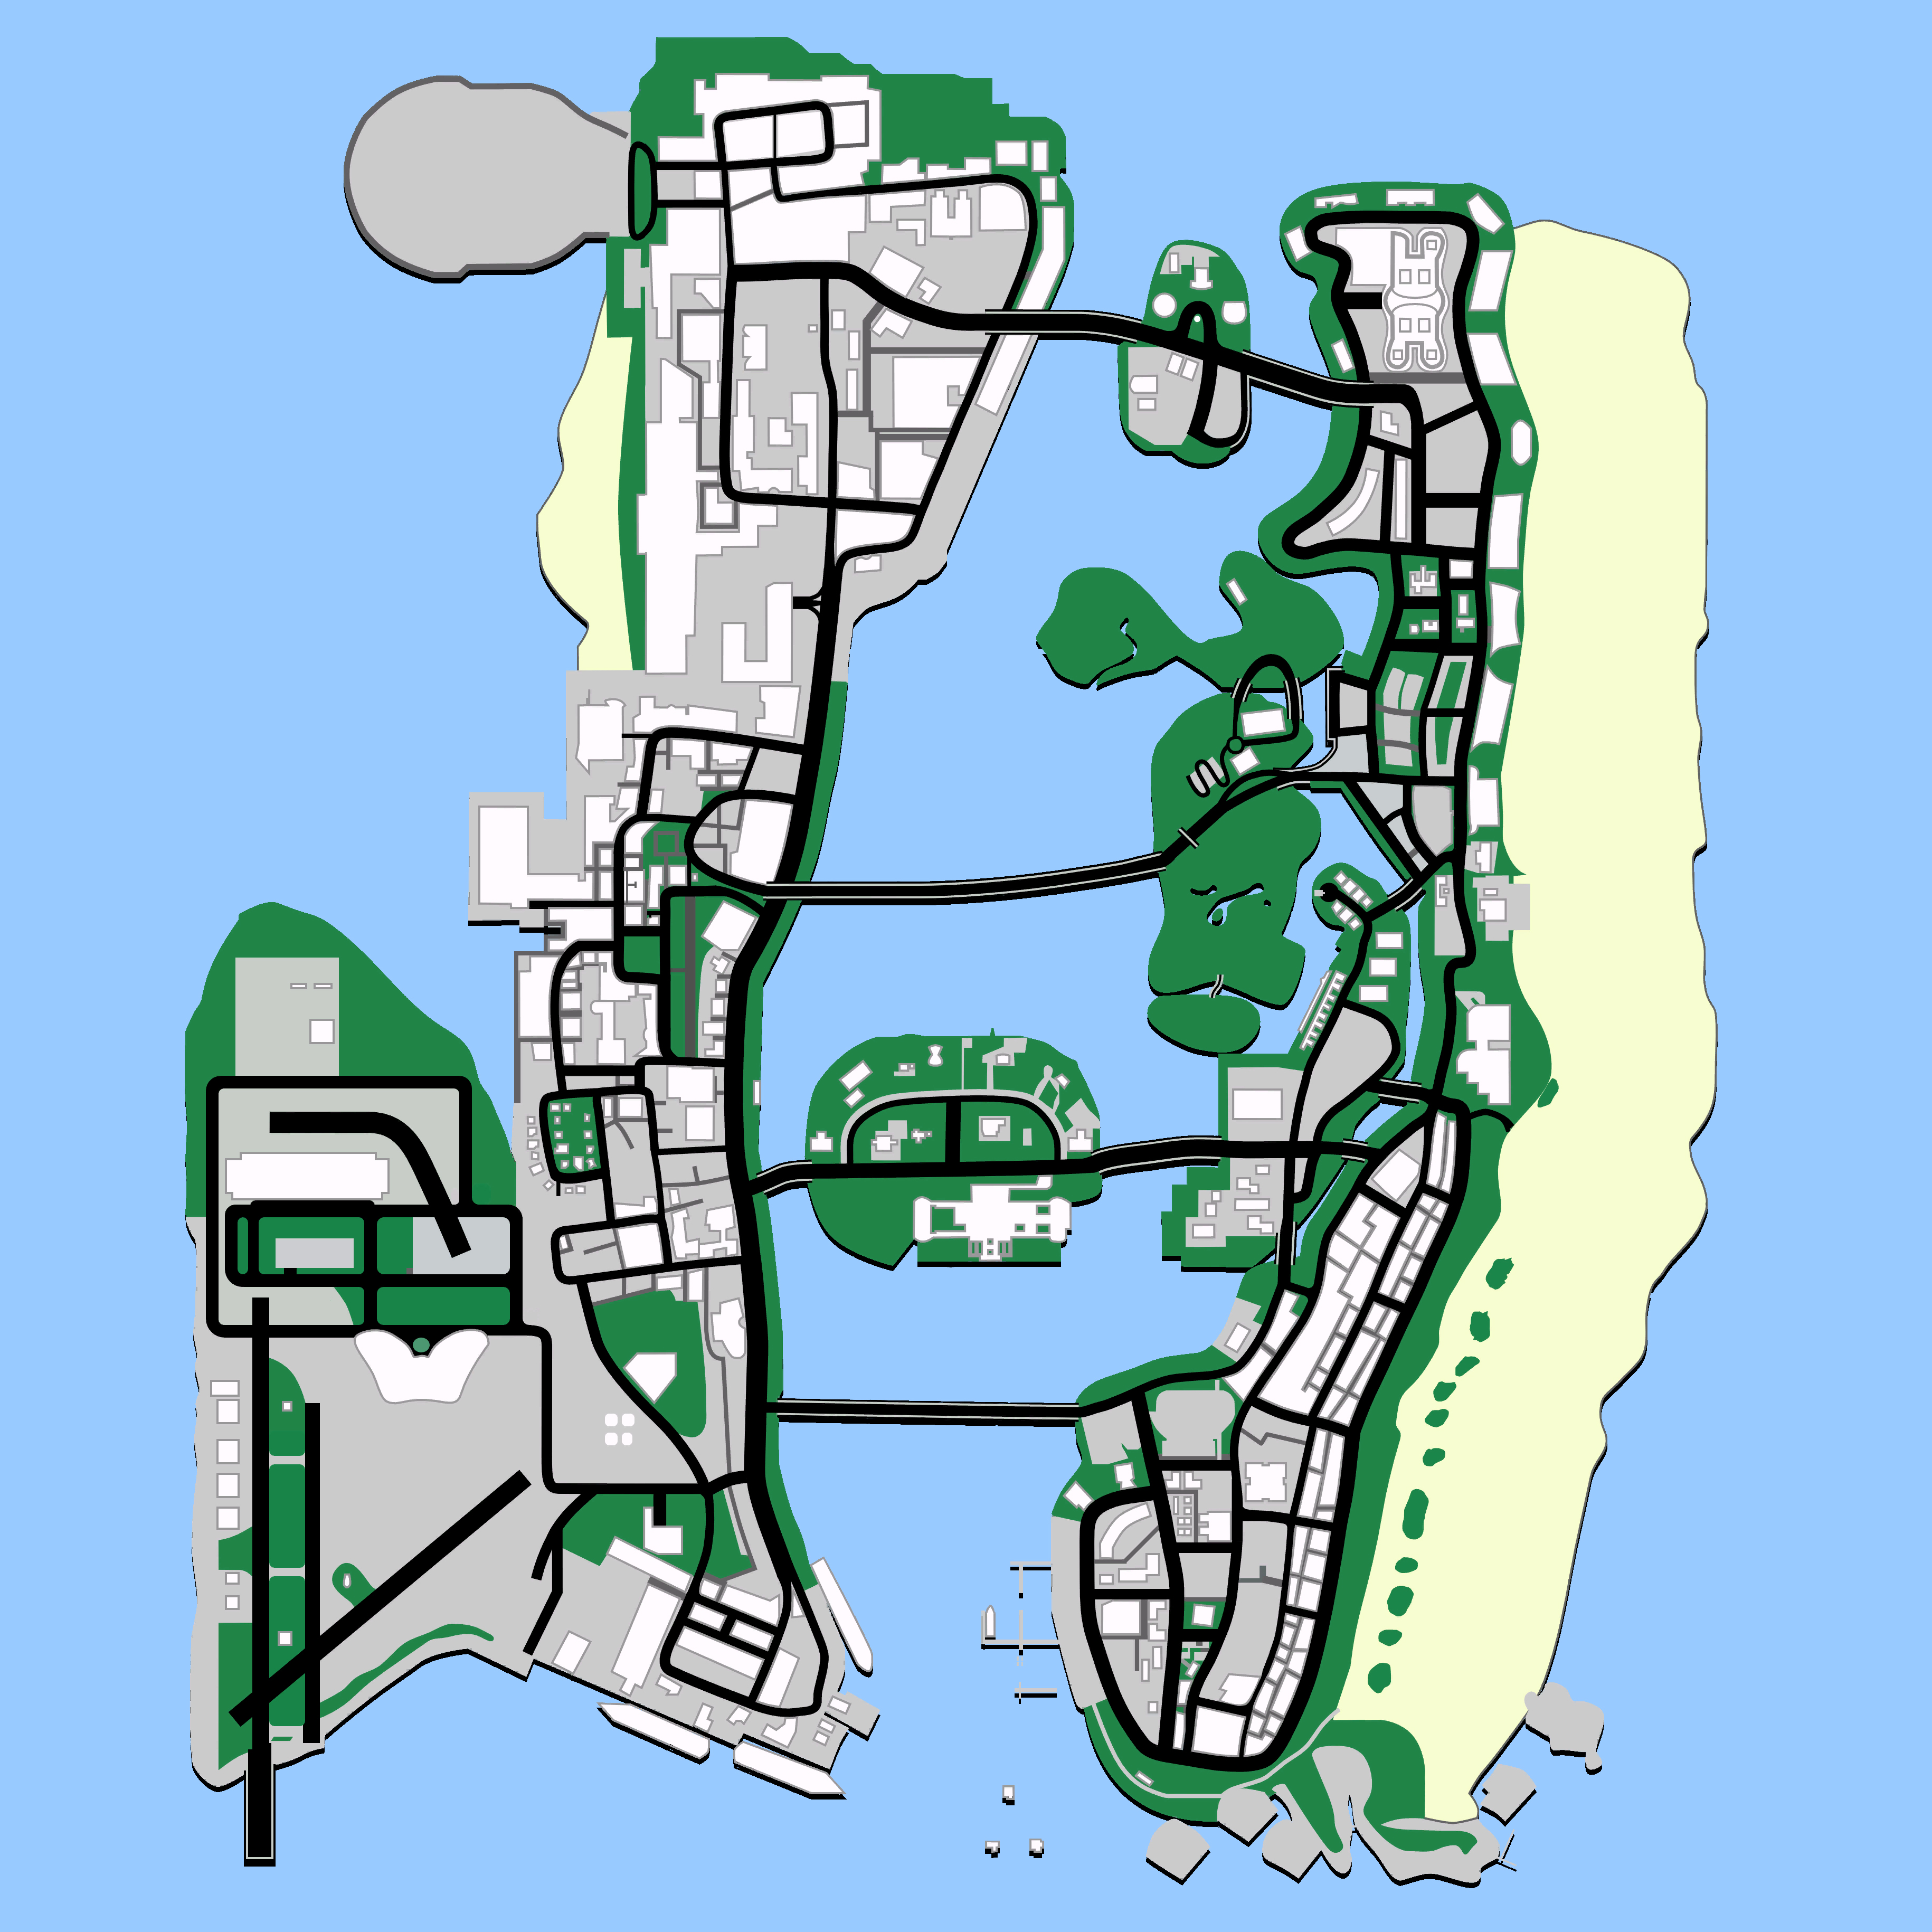 Vice City, Rockstar Games' GTA: Vice City Wiki